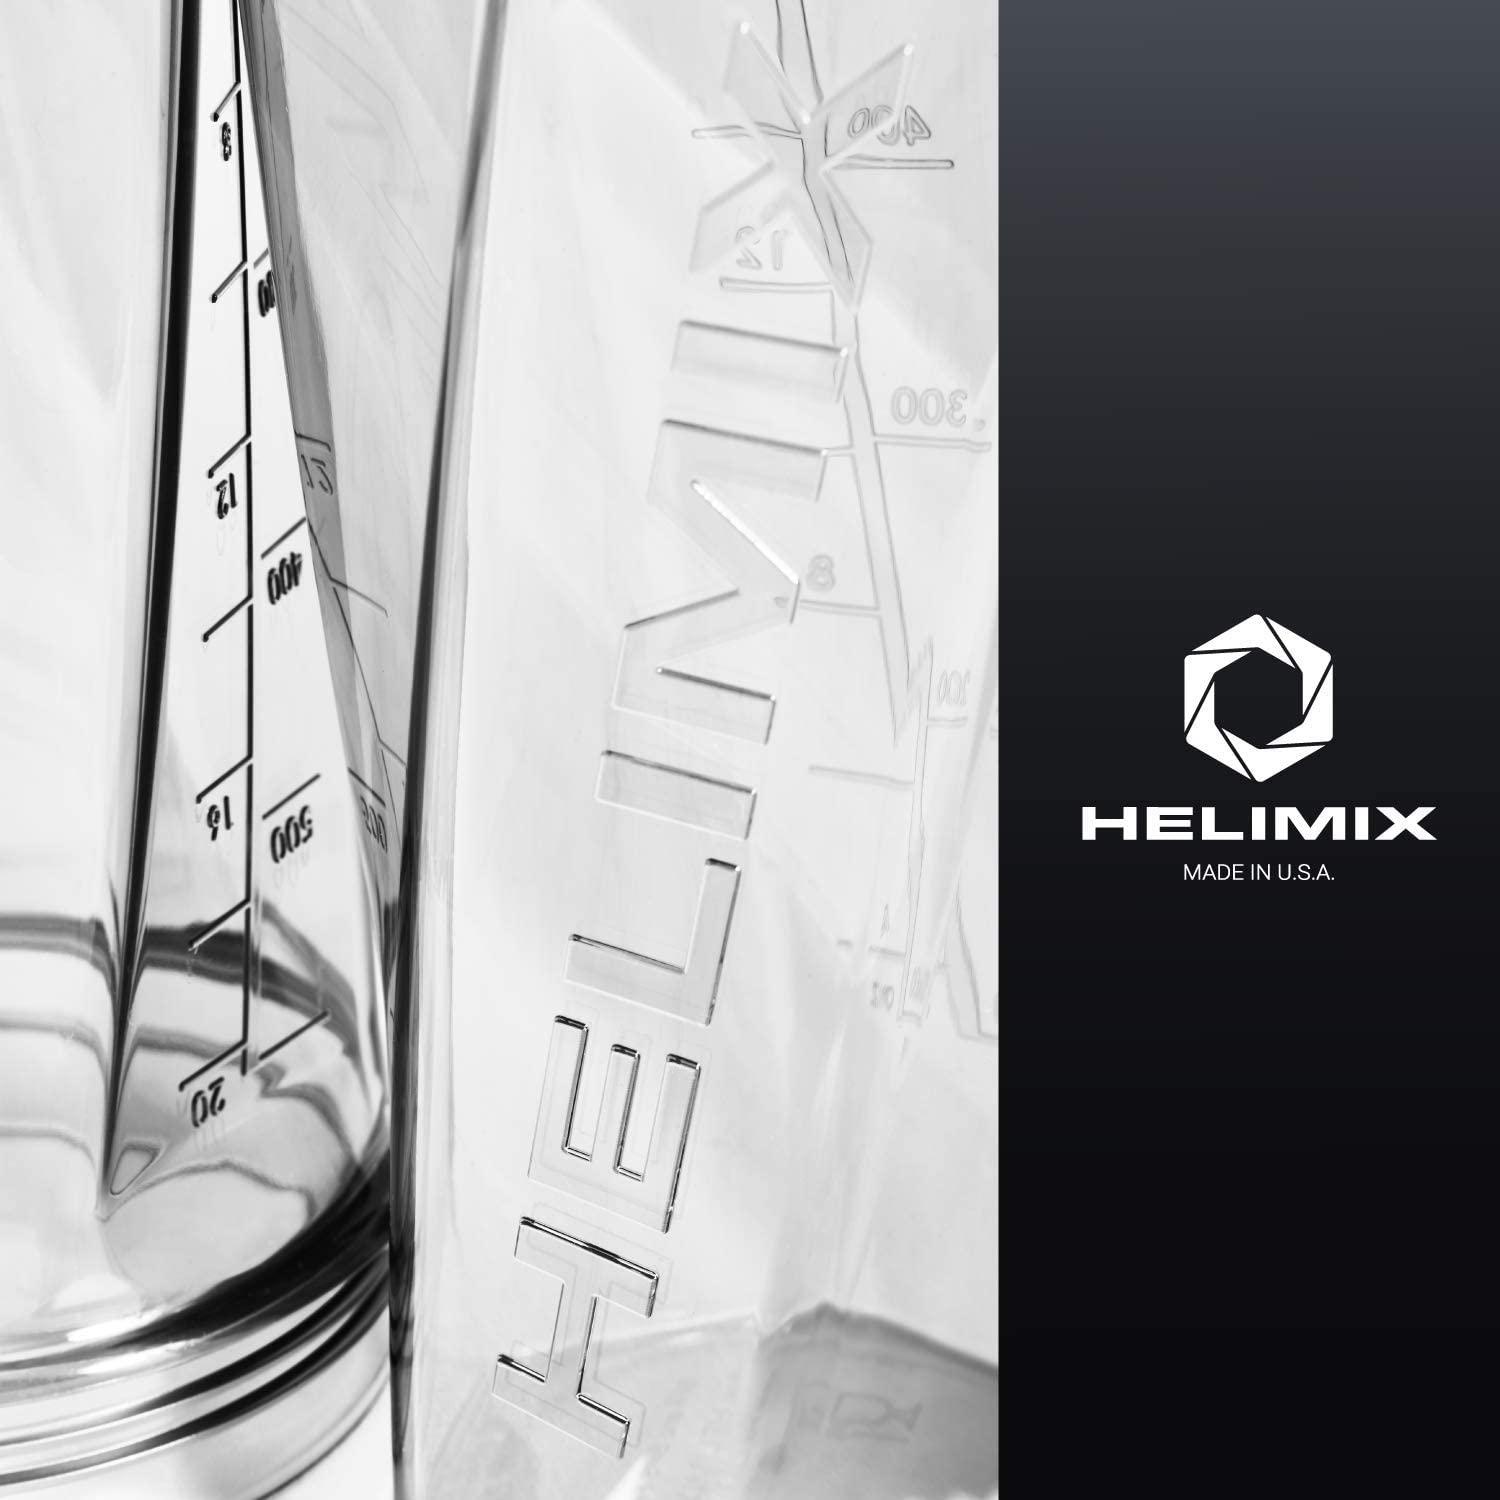 Helimix reveals its Slate Blue vortex shaker launching tomorrow